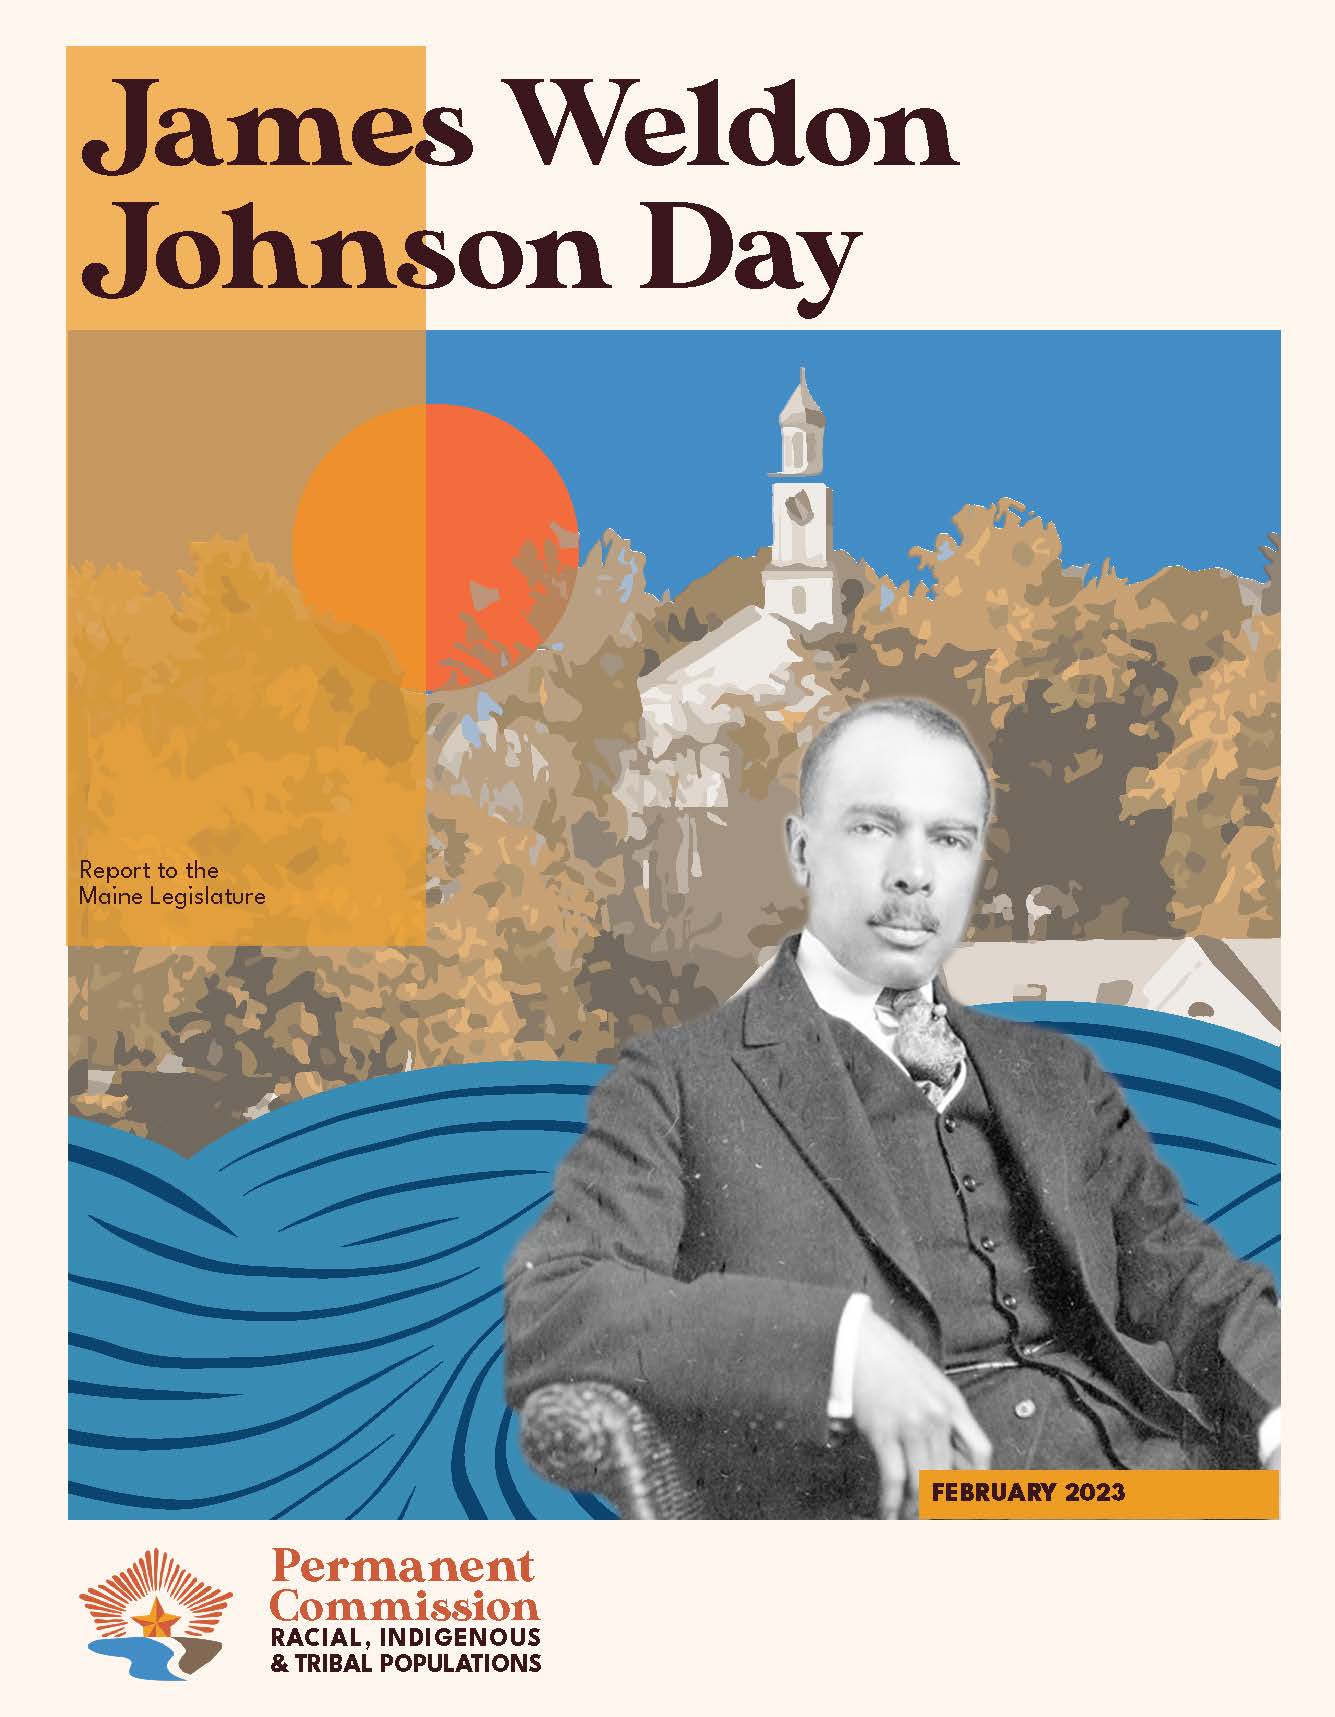 James Weldon Johnson Day